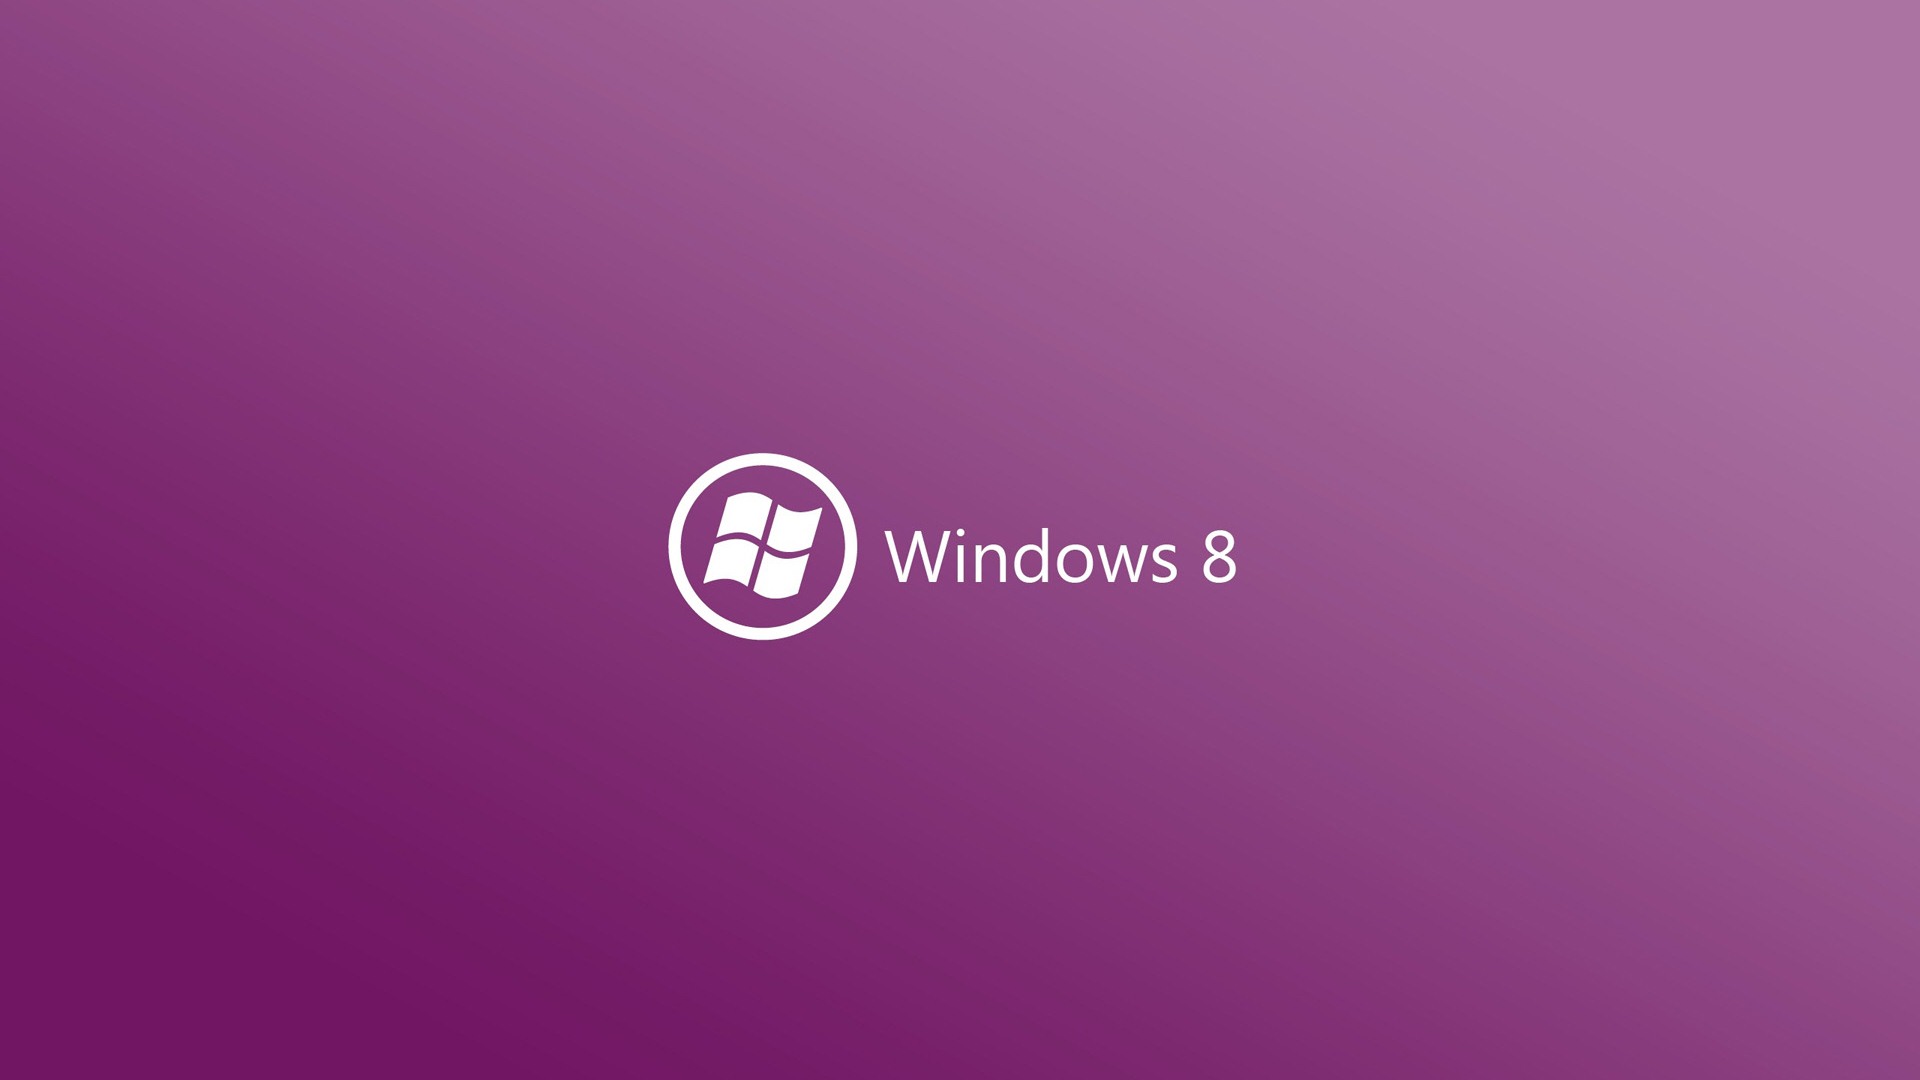 Windows 8 主題壁紙 (二) #11 - 1920x1080